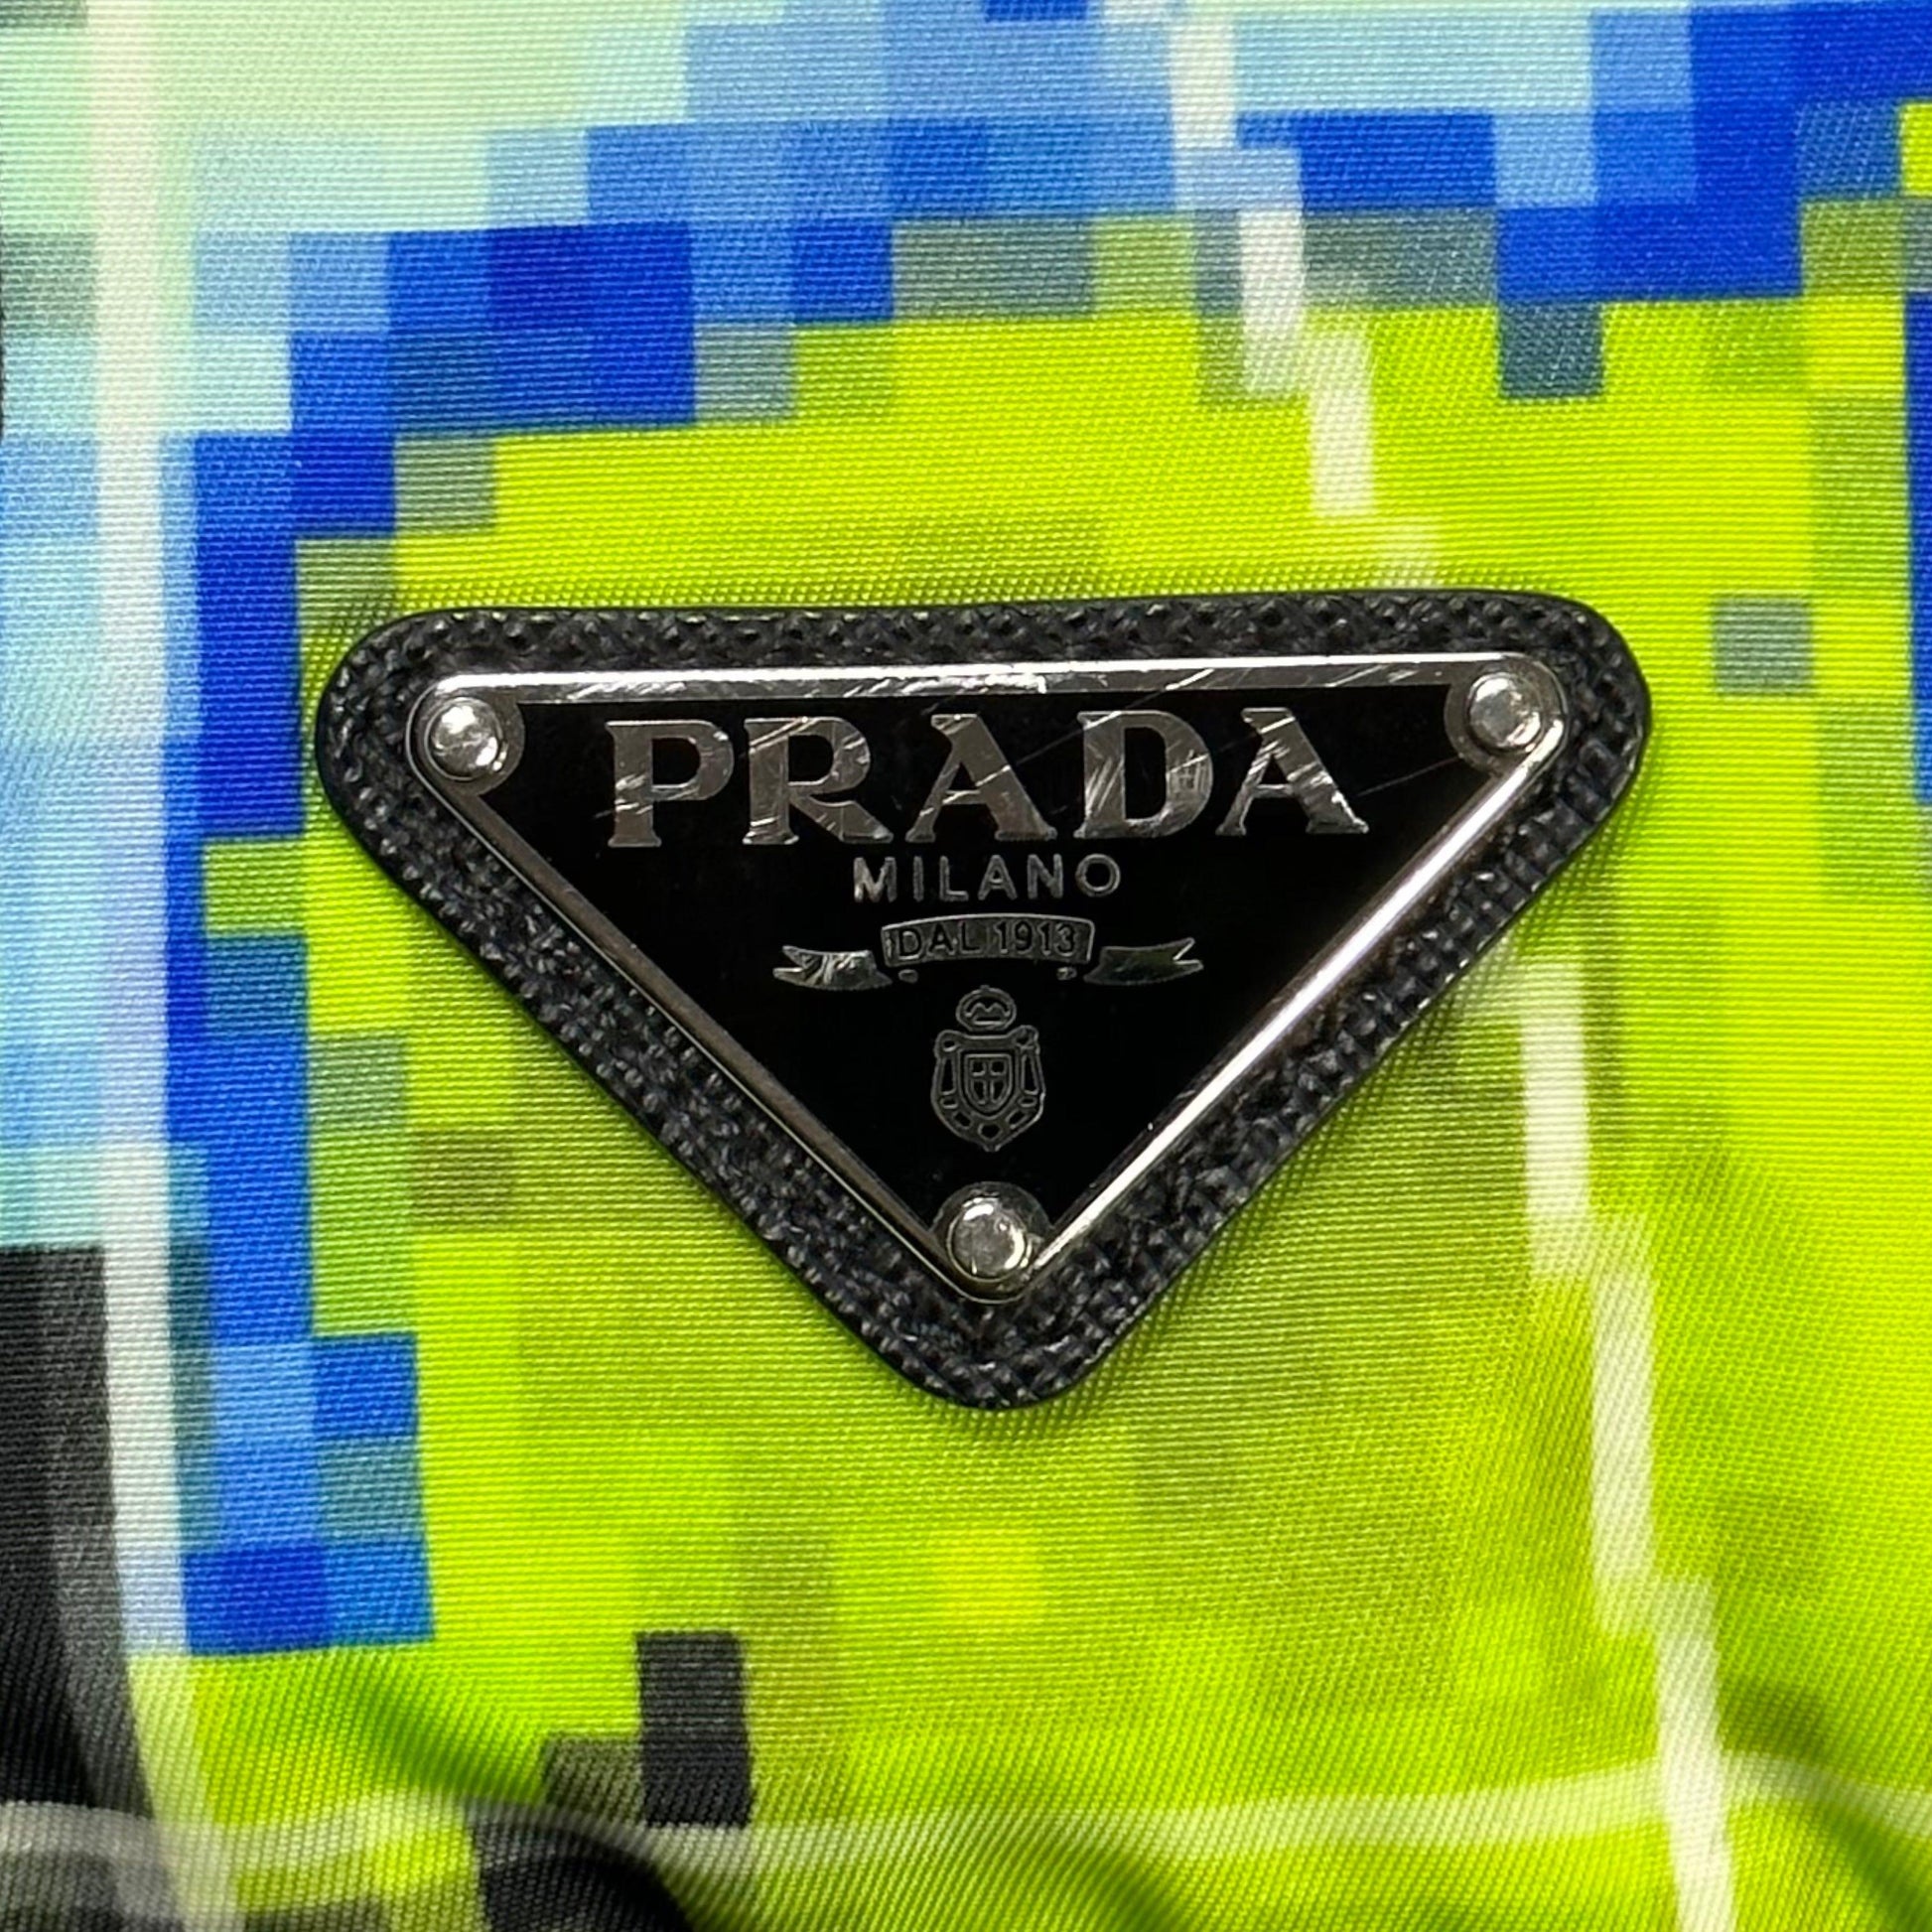 Prada SS17 Radar Nylon Tessuto Backpack + Dustbag & Cards - Known Source